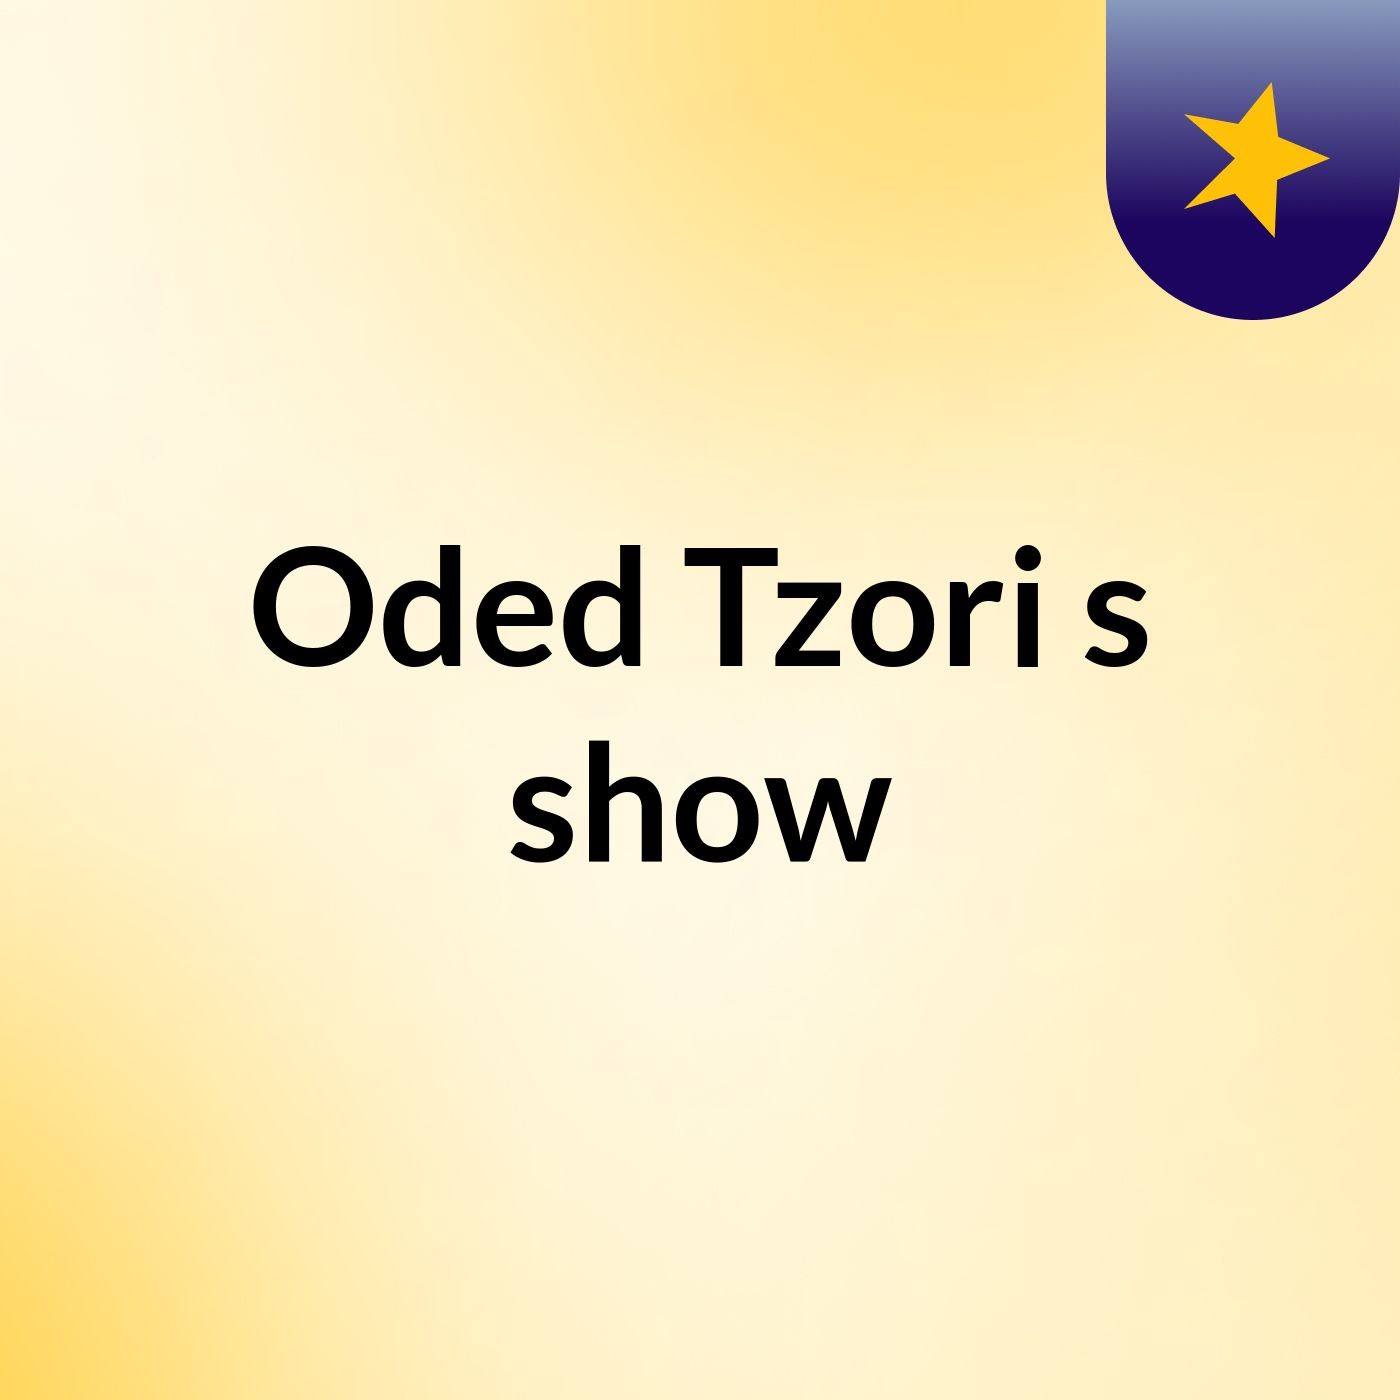 Oded Tzori's show